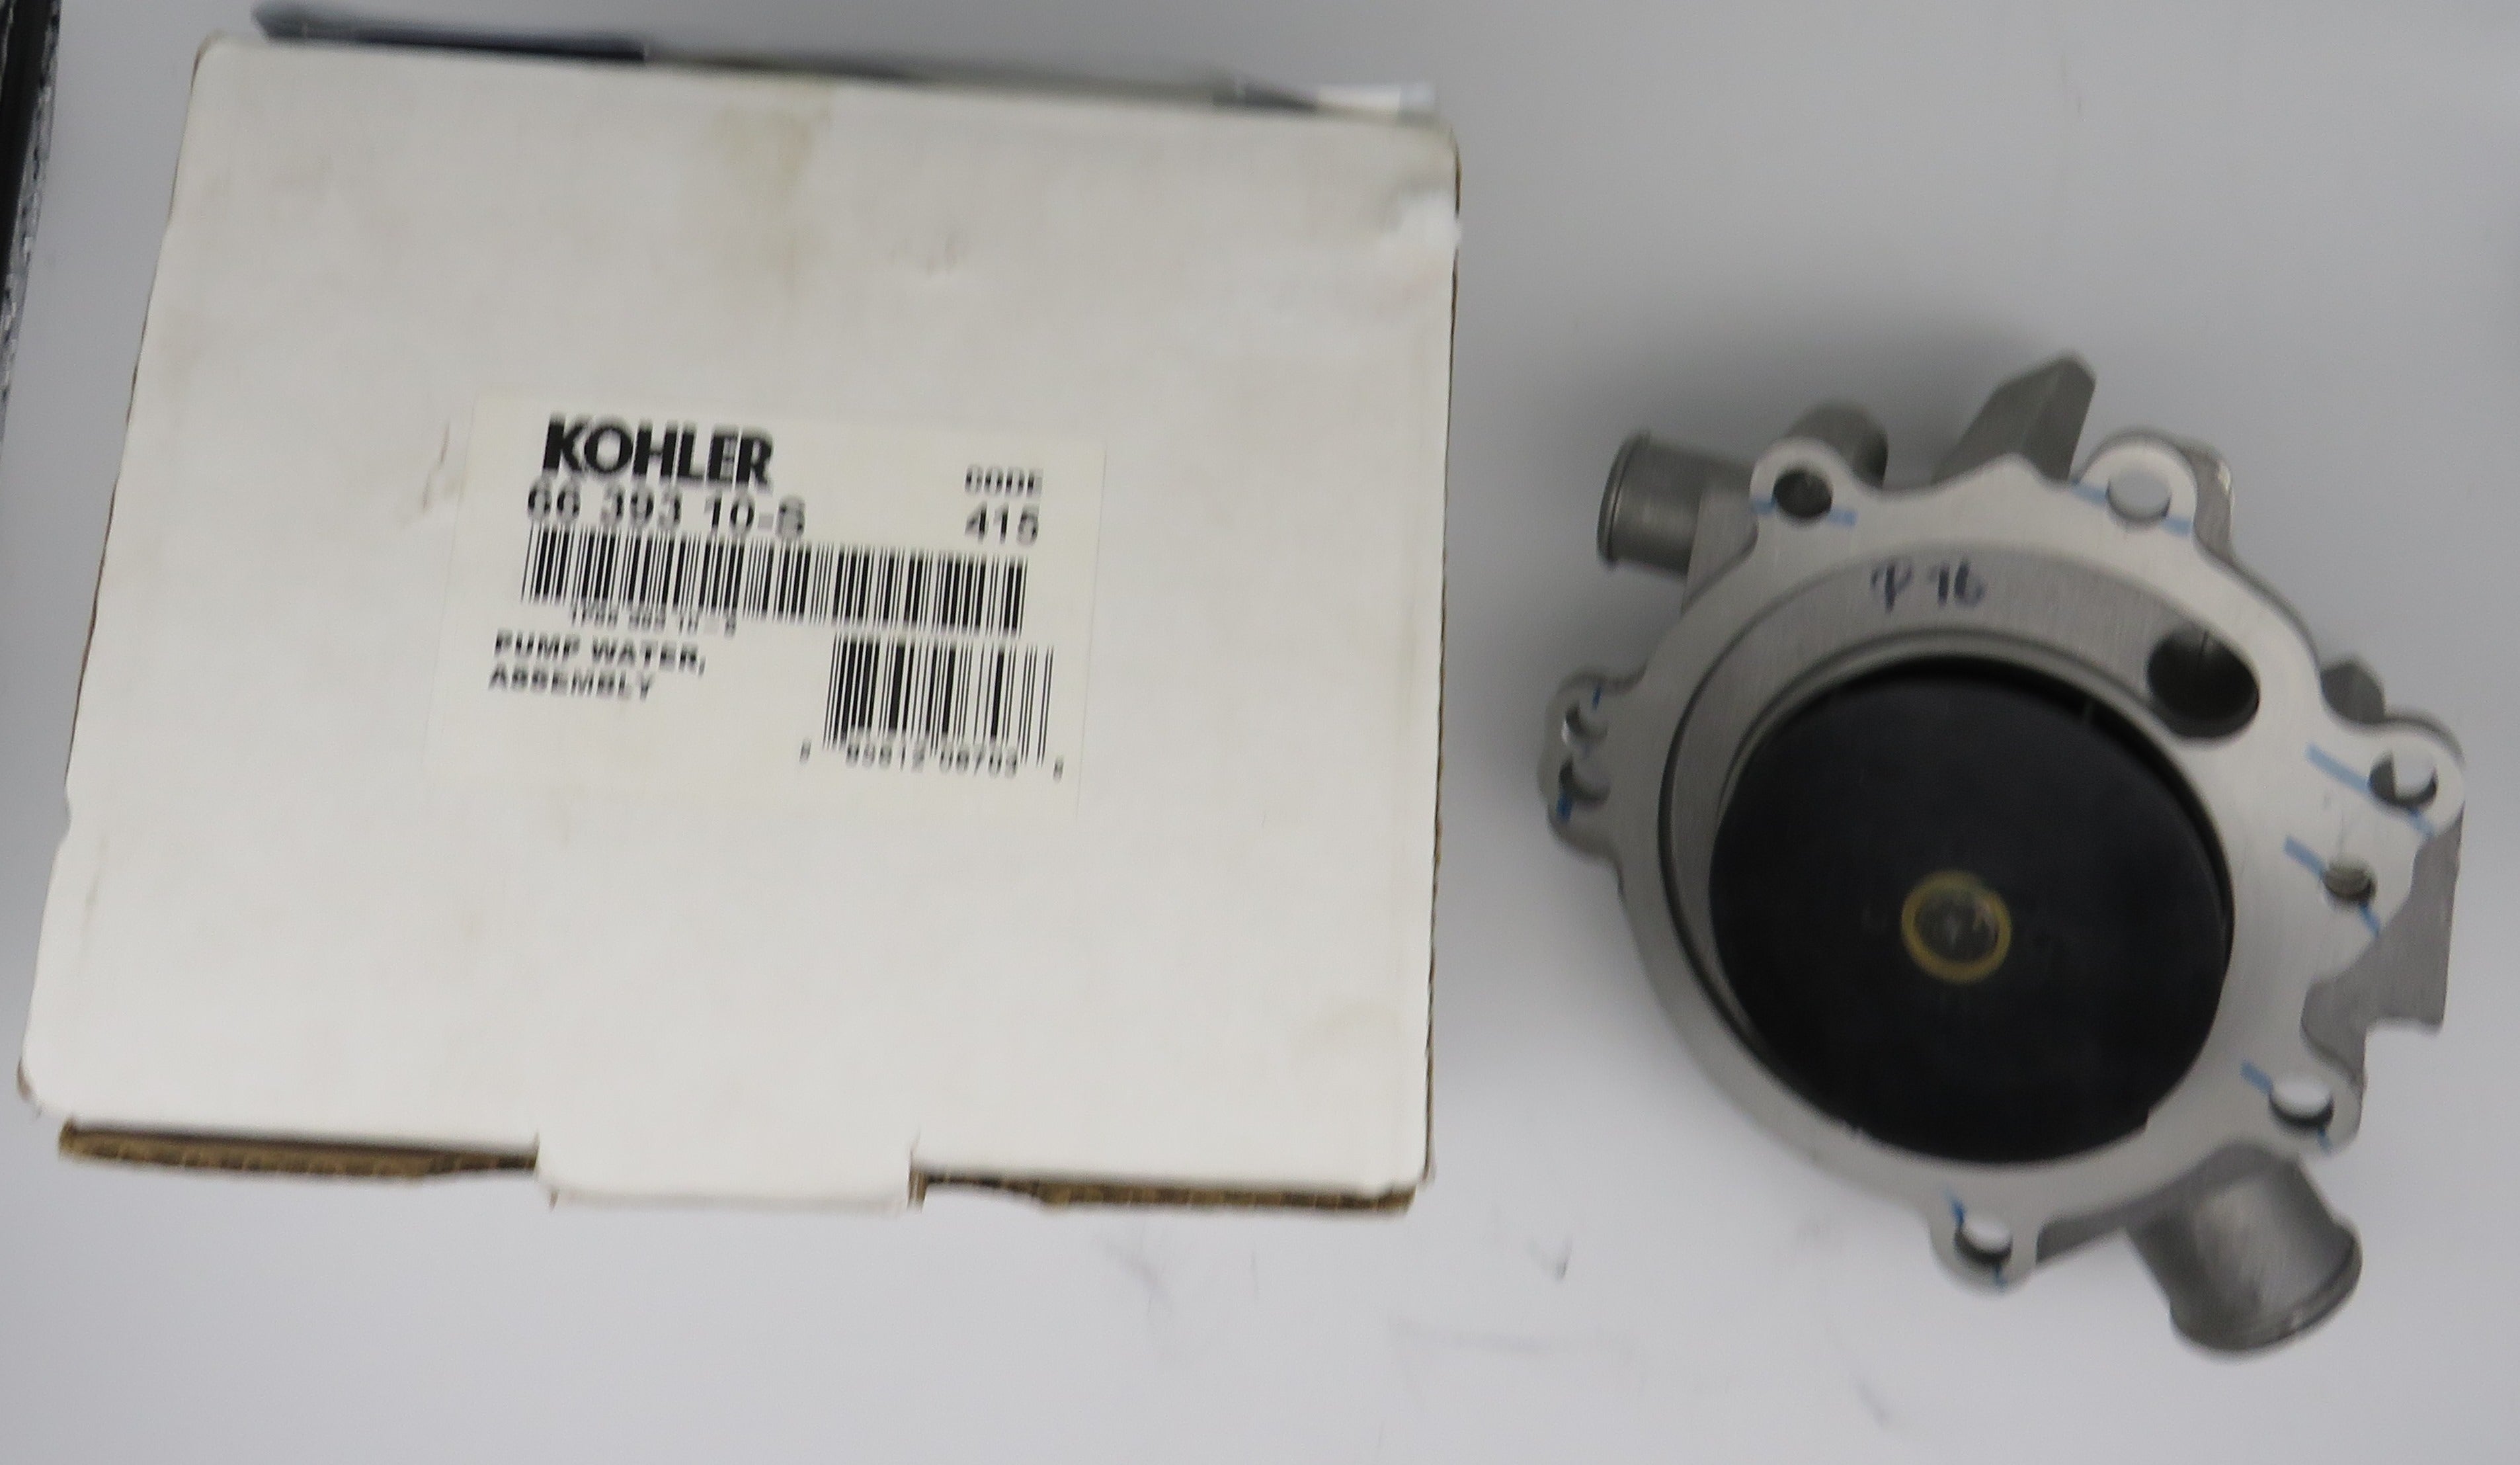 66 393 10-S Kohler Water Pump Assembly